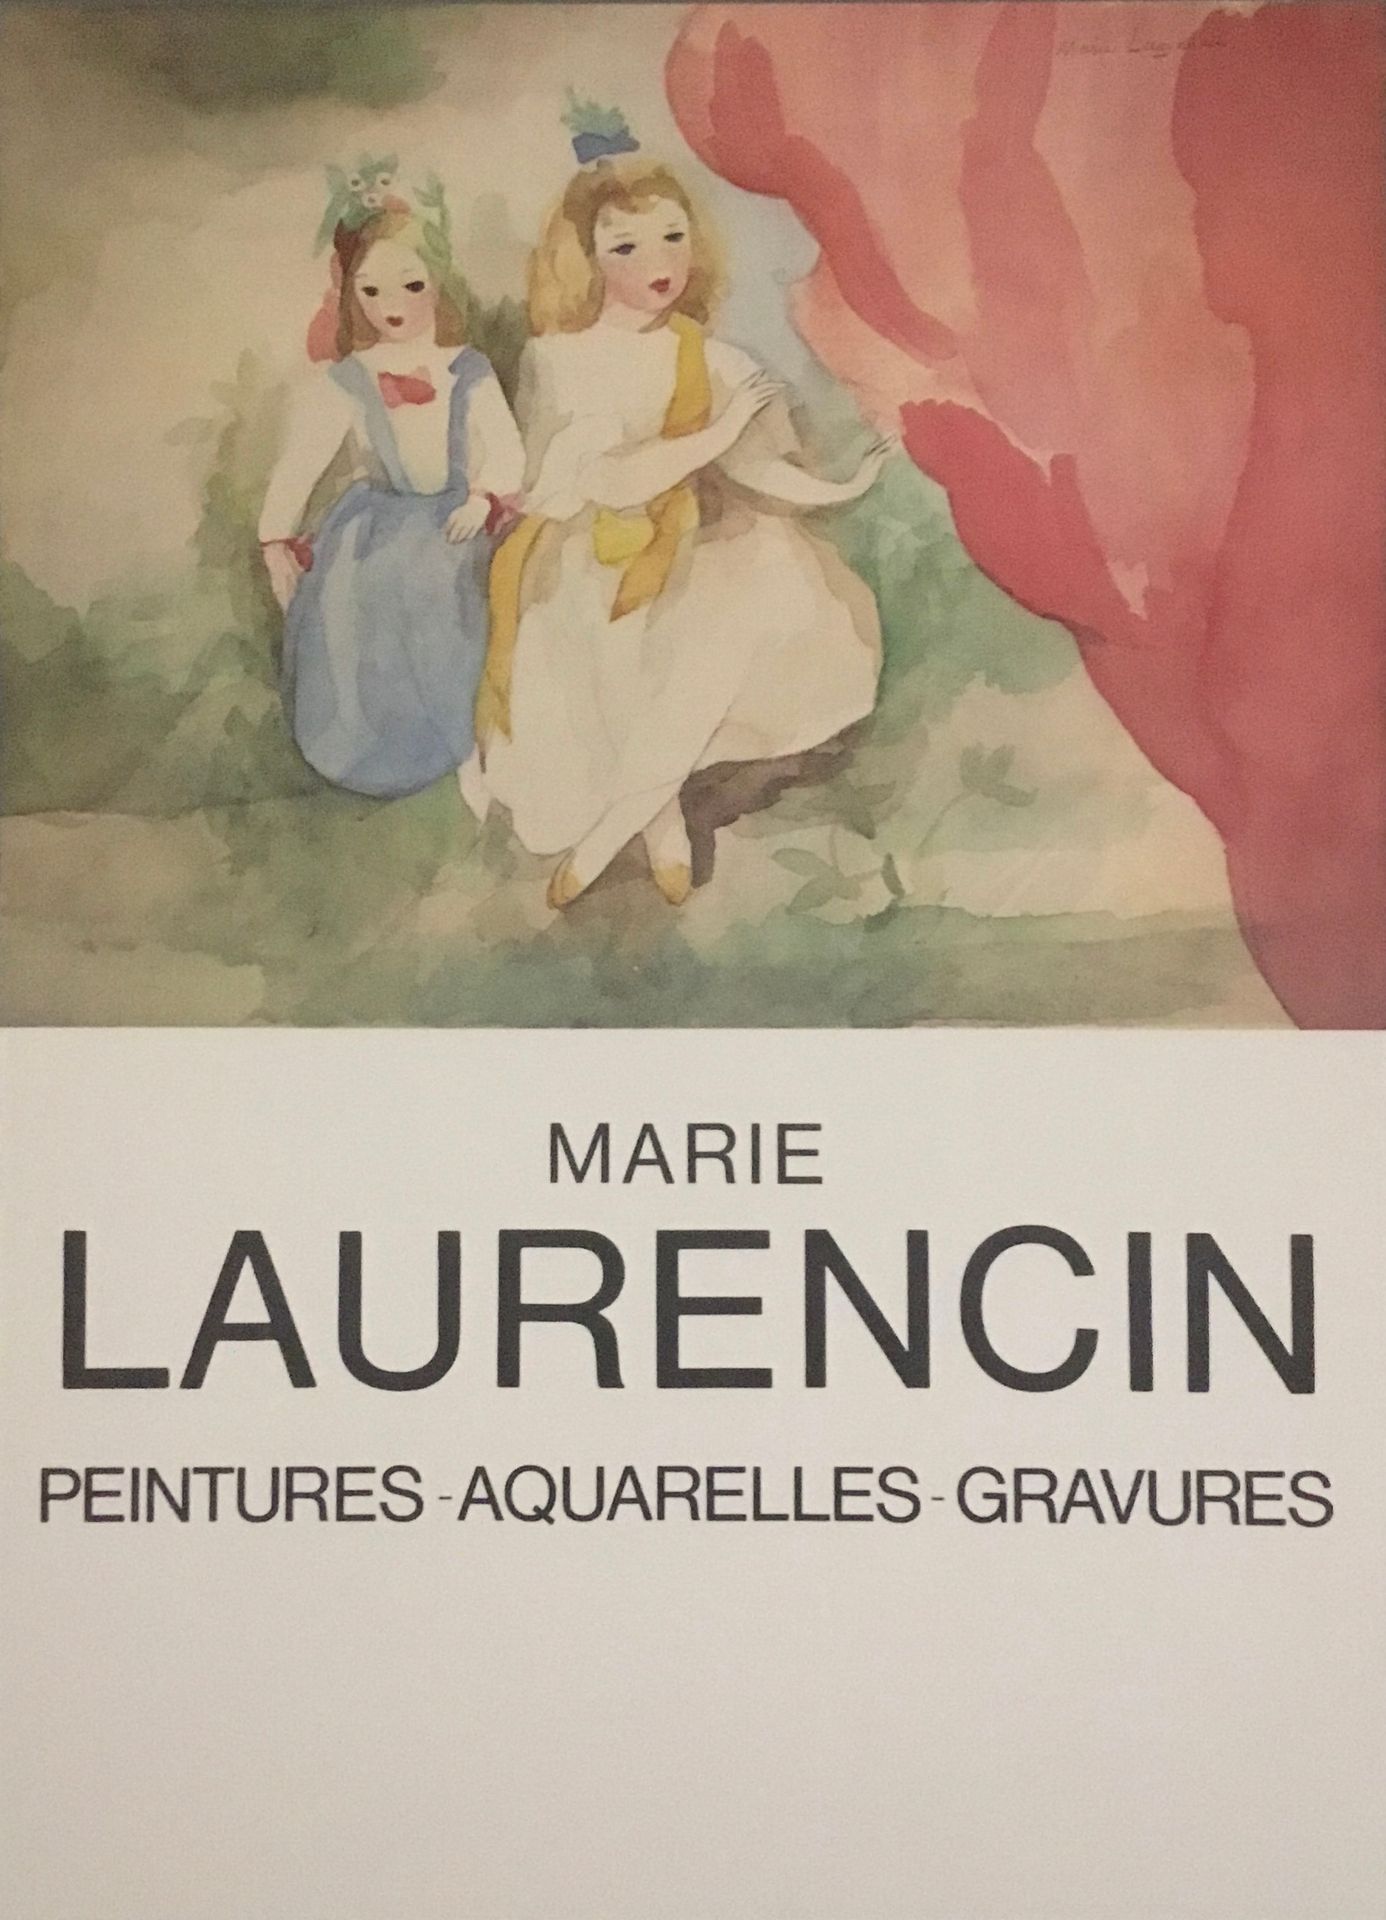 Null LAURENCIN Marie 

Affiche Offset. 

Format 61 x 44.5 cm